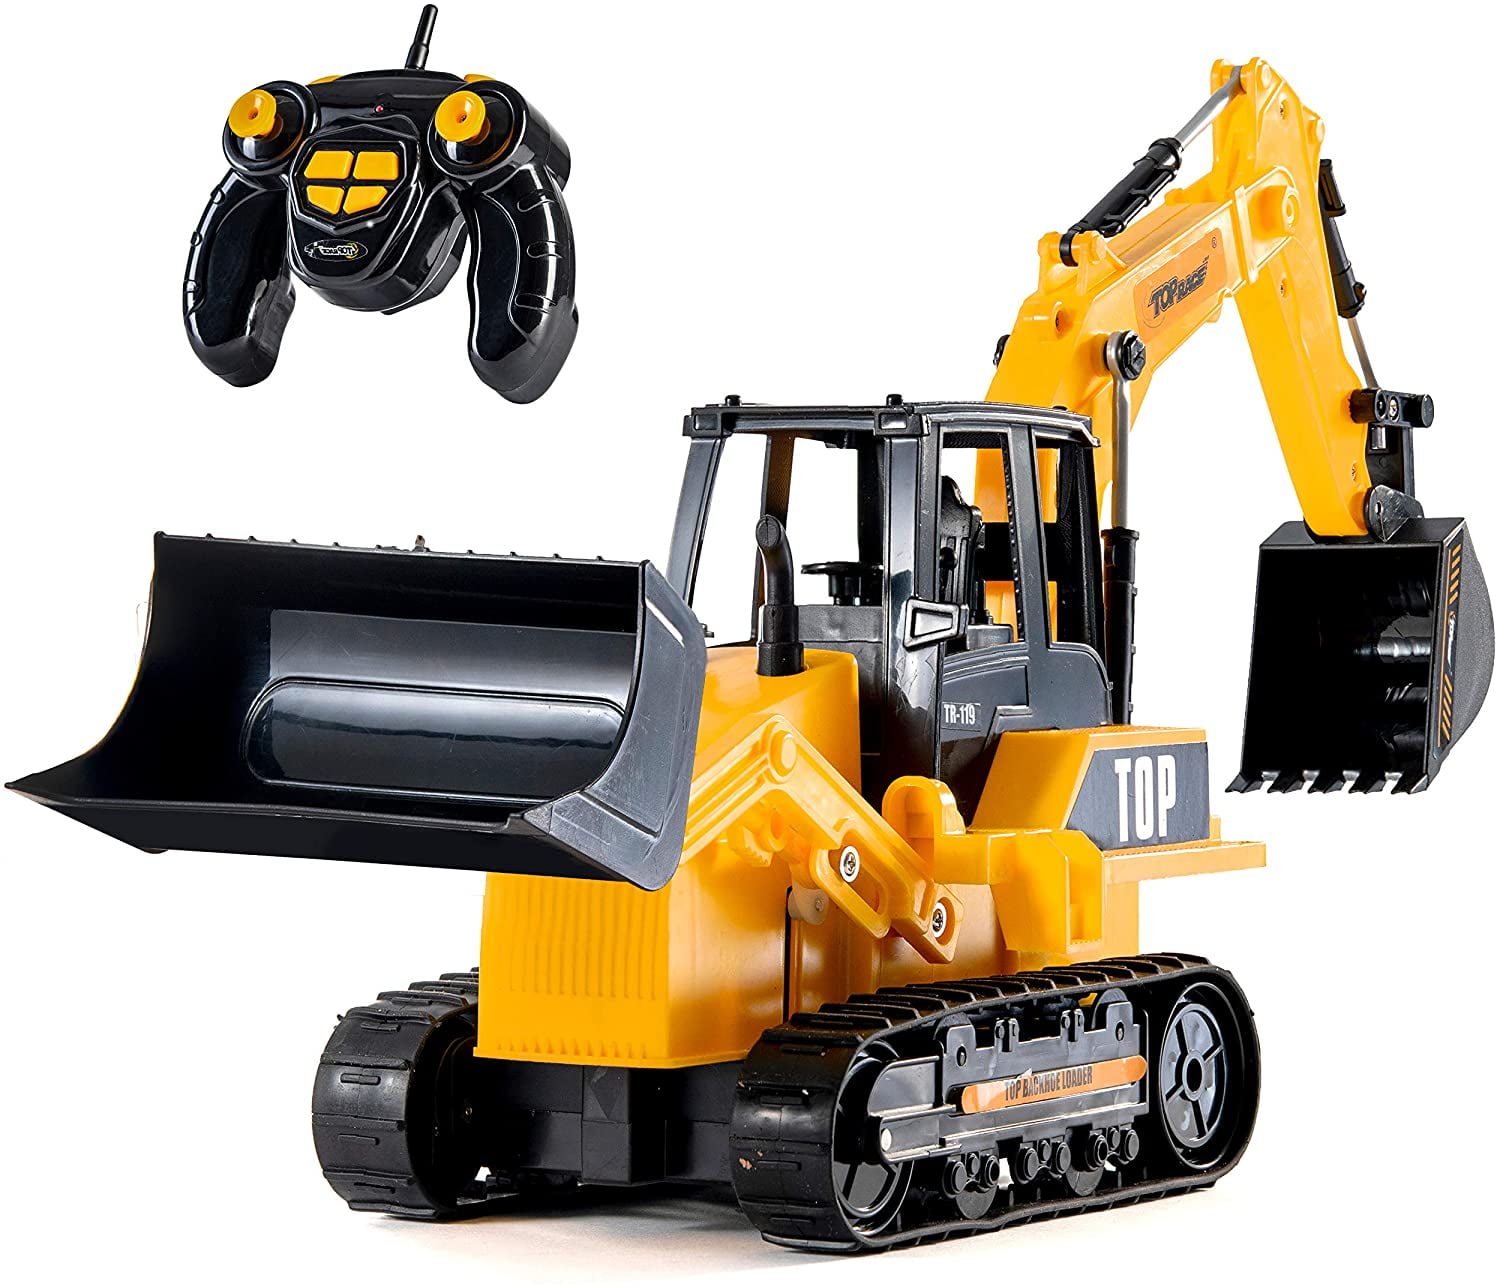 Bruder Schaeff HR16 Mini Excavator Construction Digger Toy Kids Model Scale 1:16 